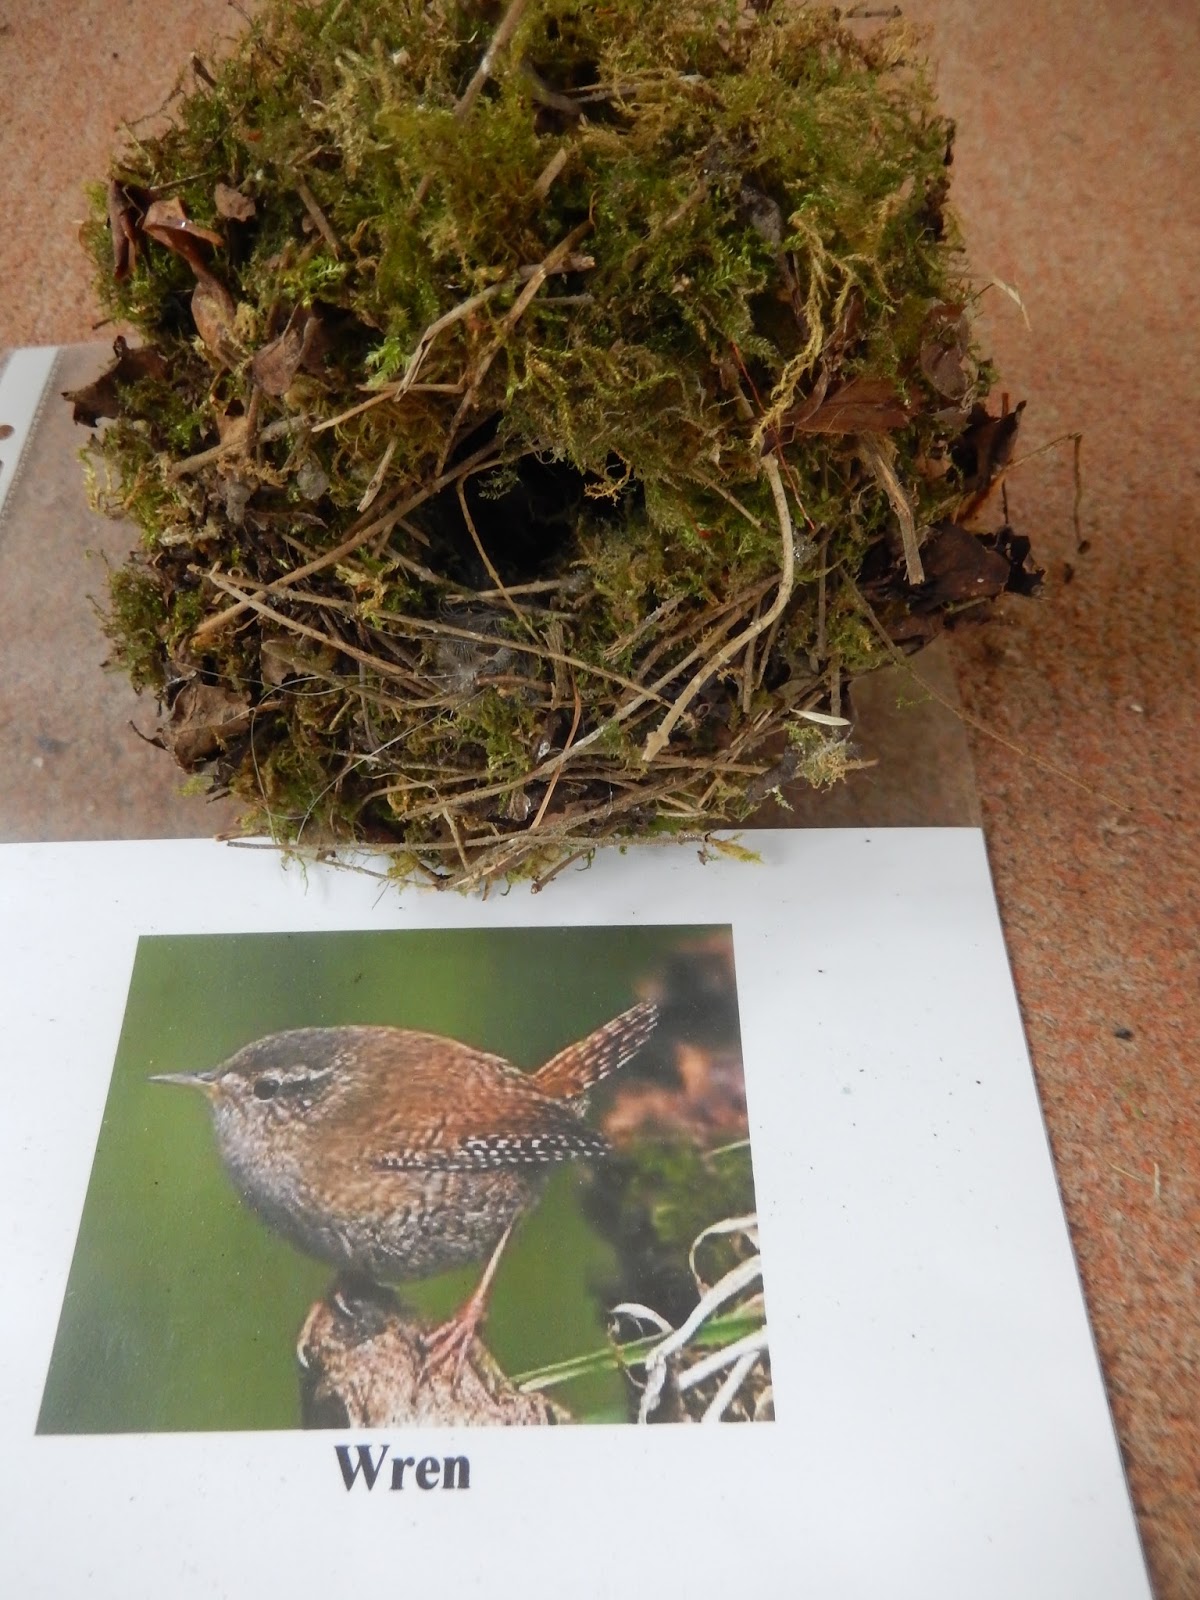 simon boyes: some common british birds' nests